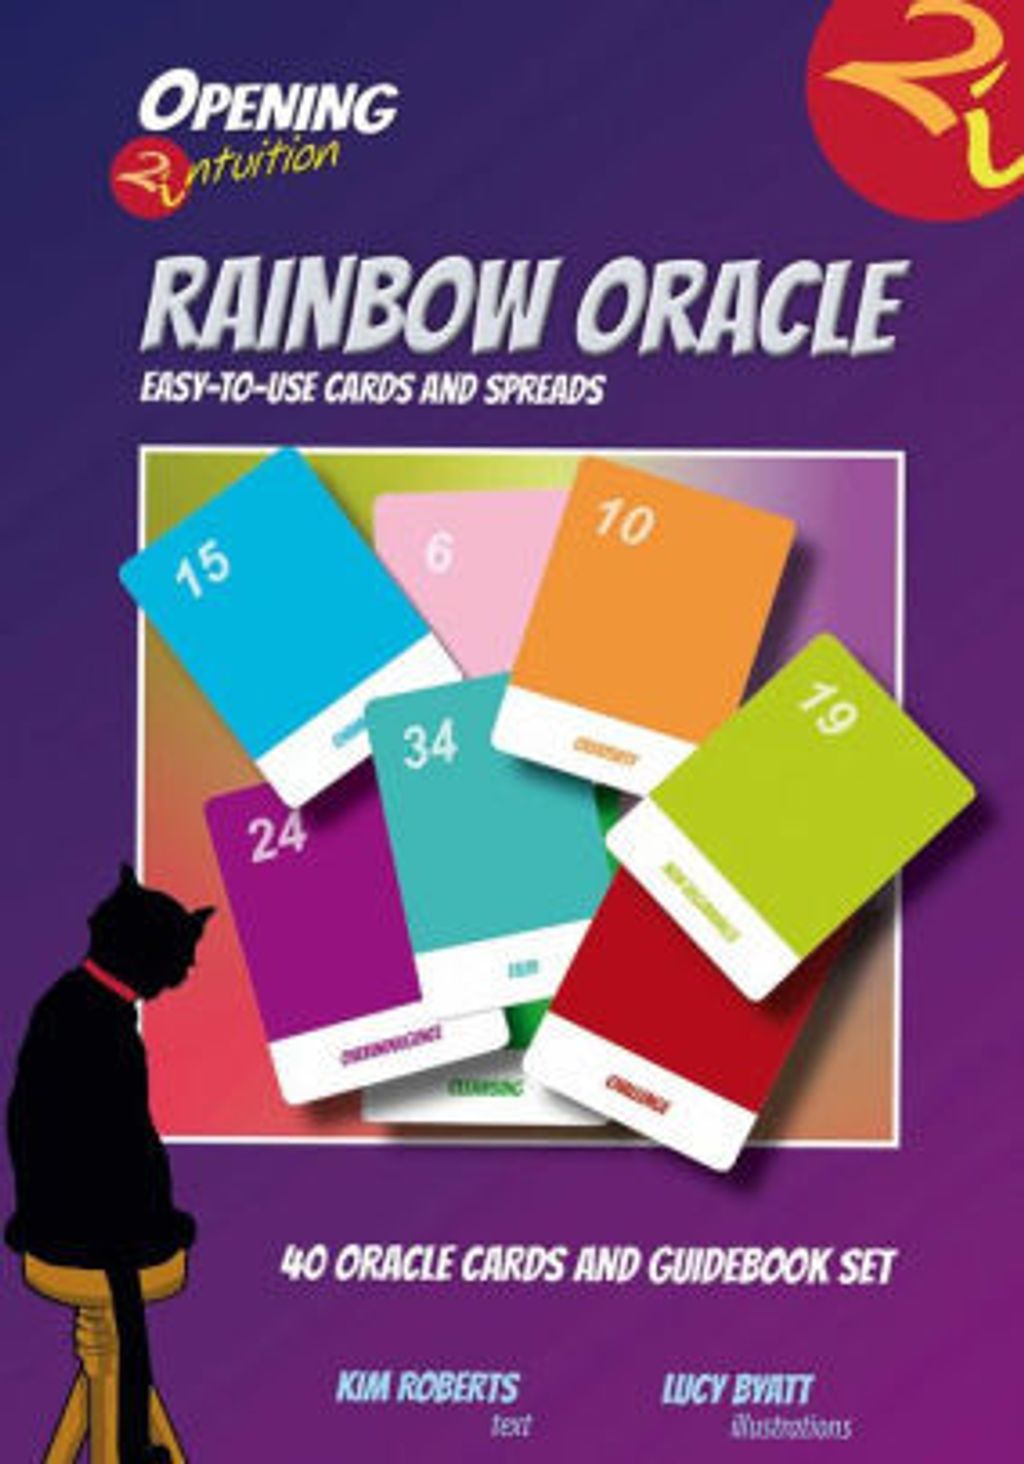 綻放彩虹直覺指引卡：Opening2Intuition Rainbow Oracle.jpg